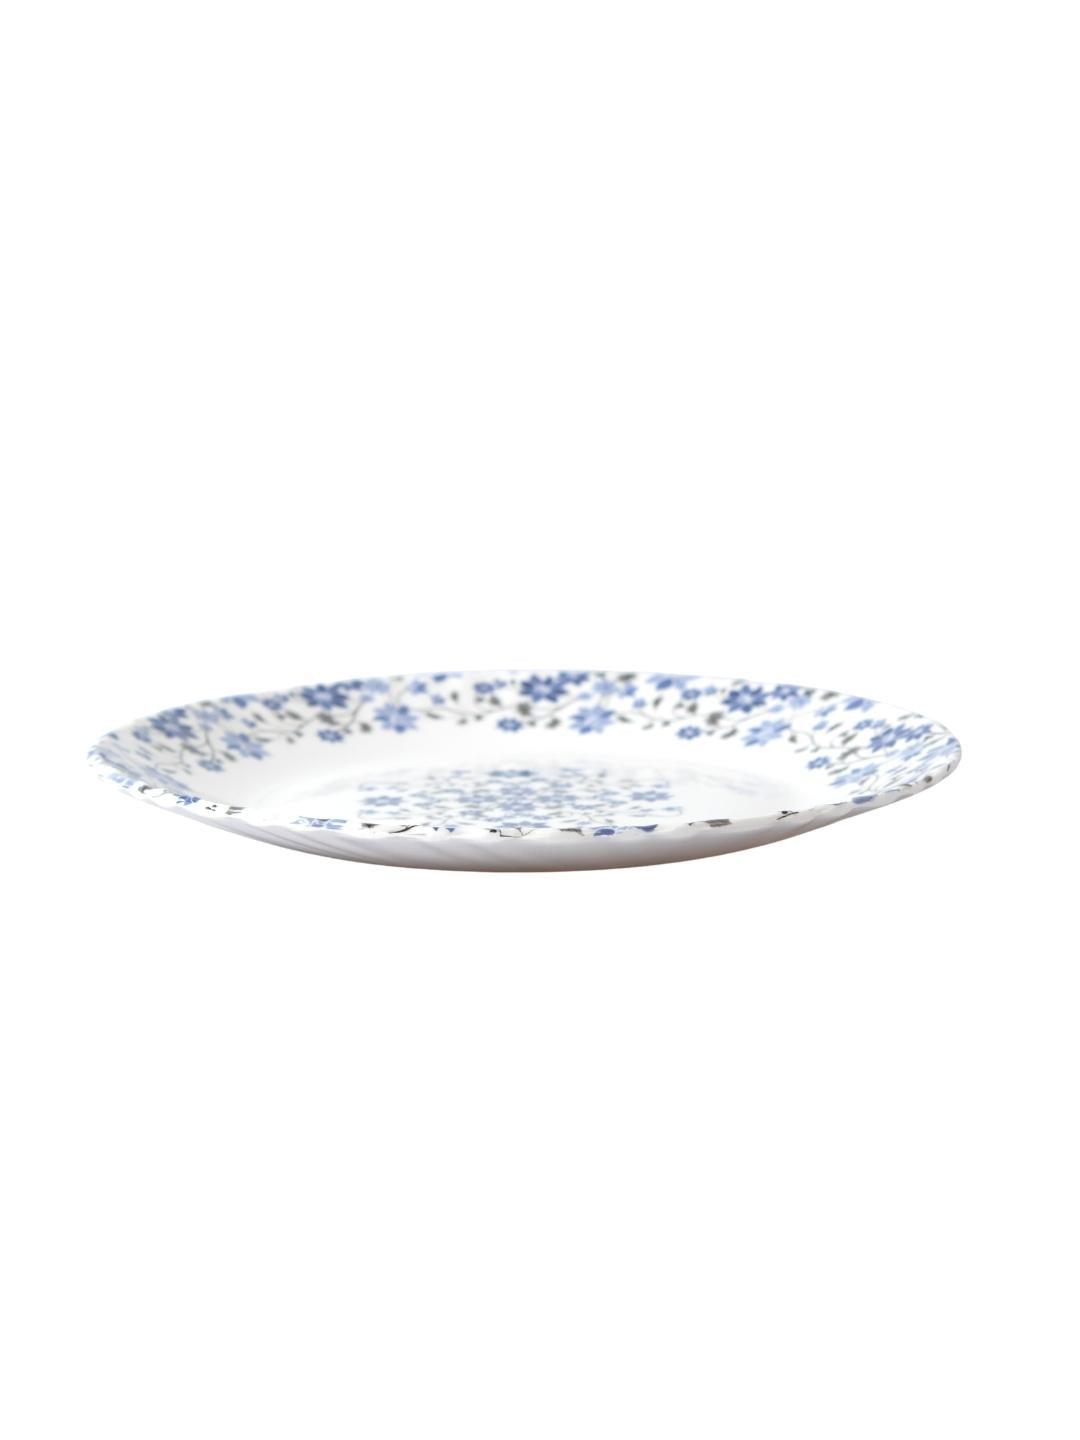 Market 99 Melamine Tableware Glossy Floral Finish Quarter Plates for Dining Table (Set Of 6) - MARKET 99